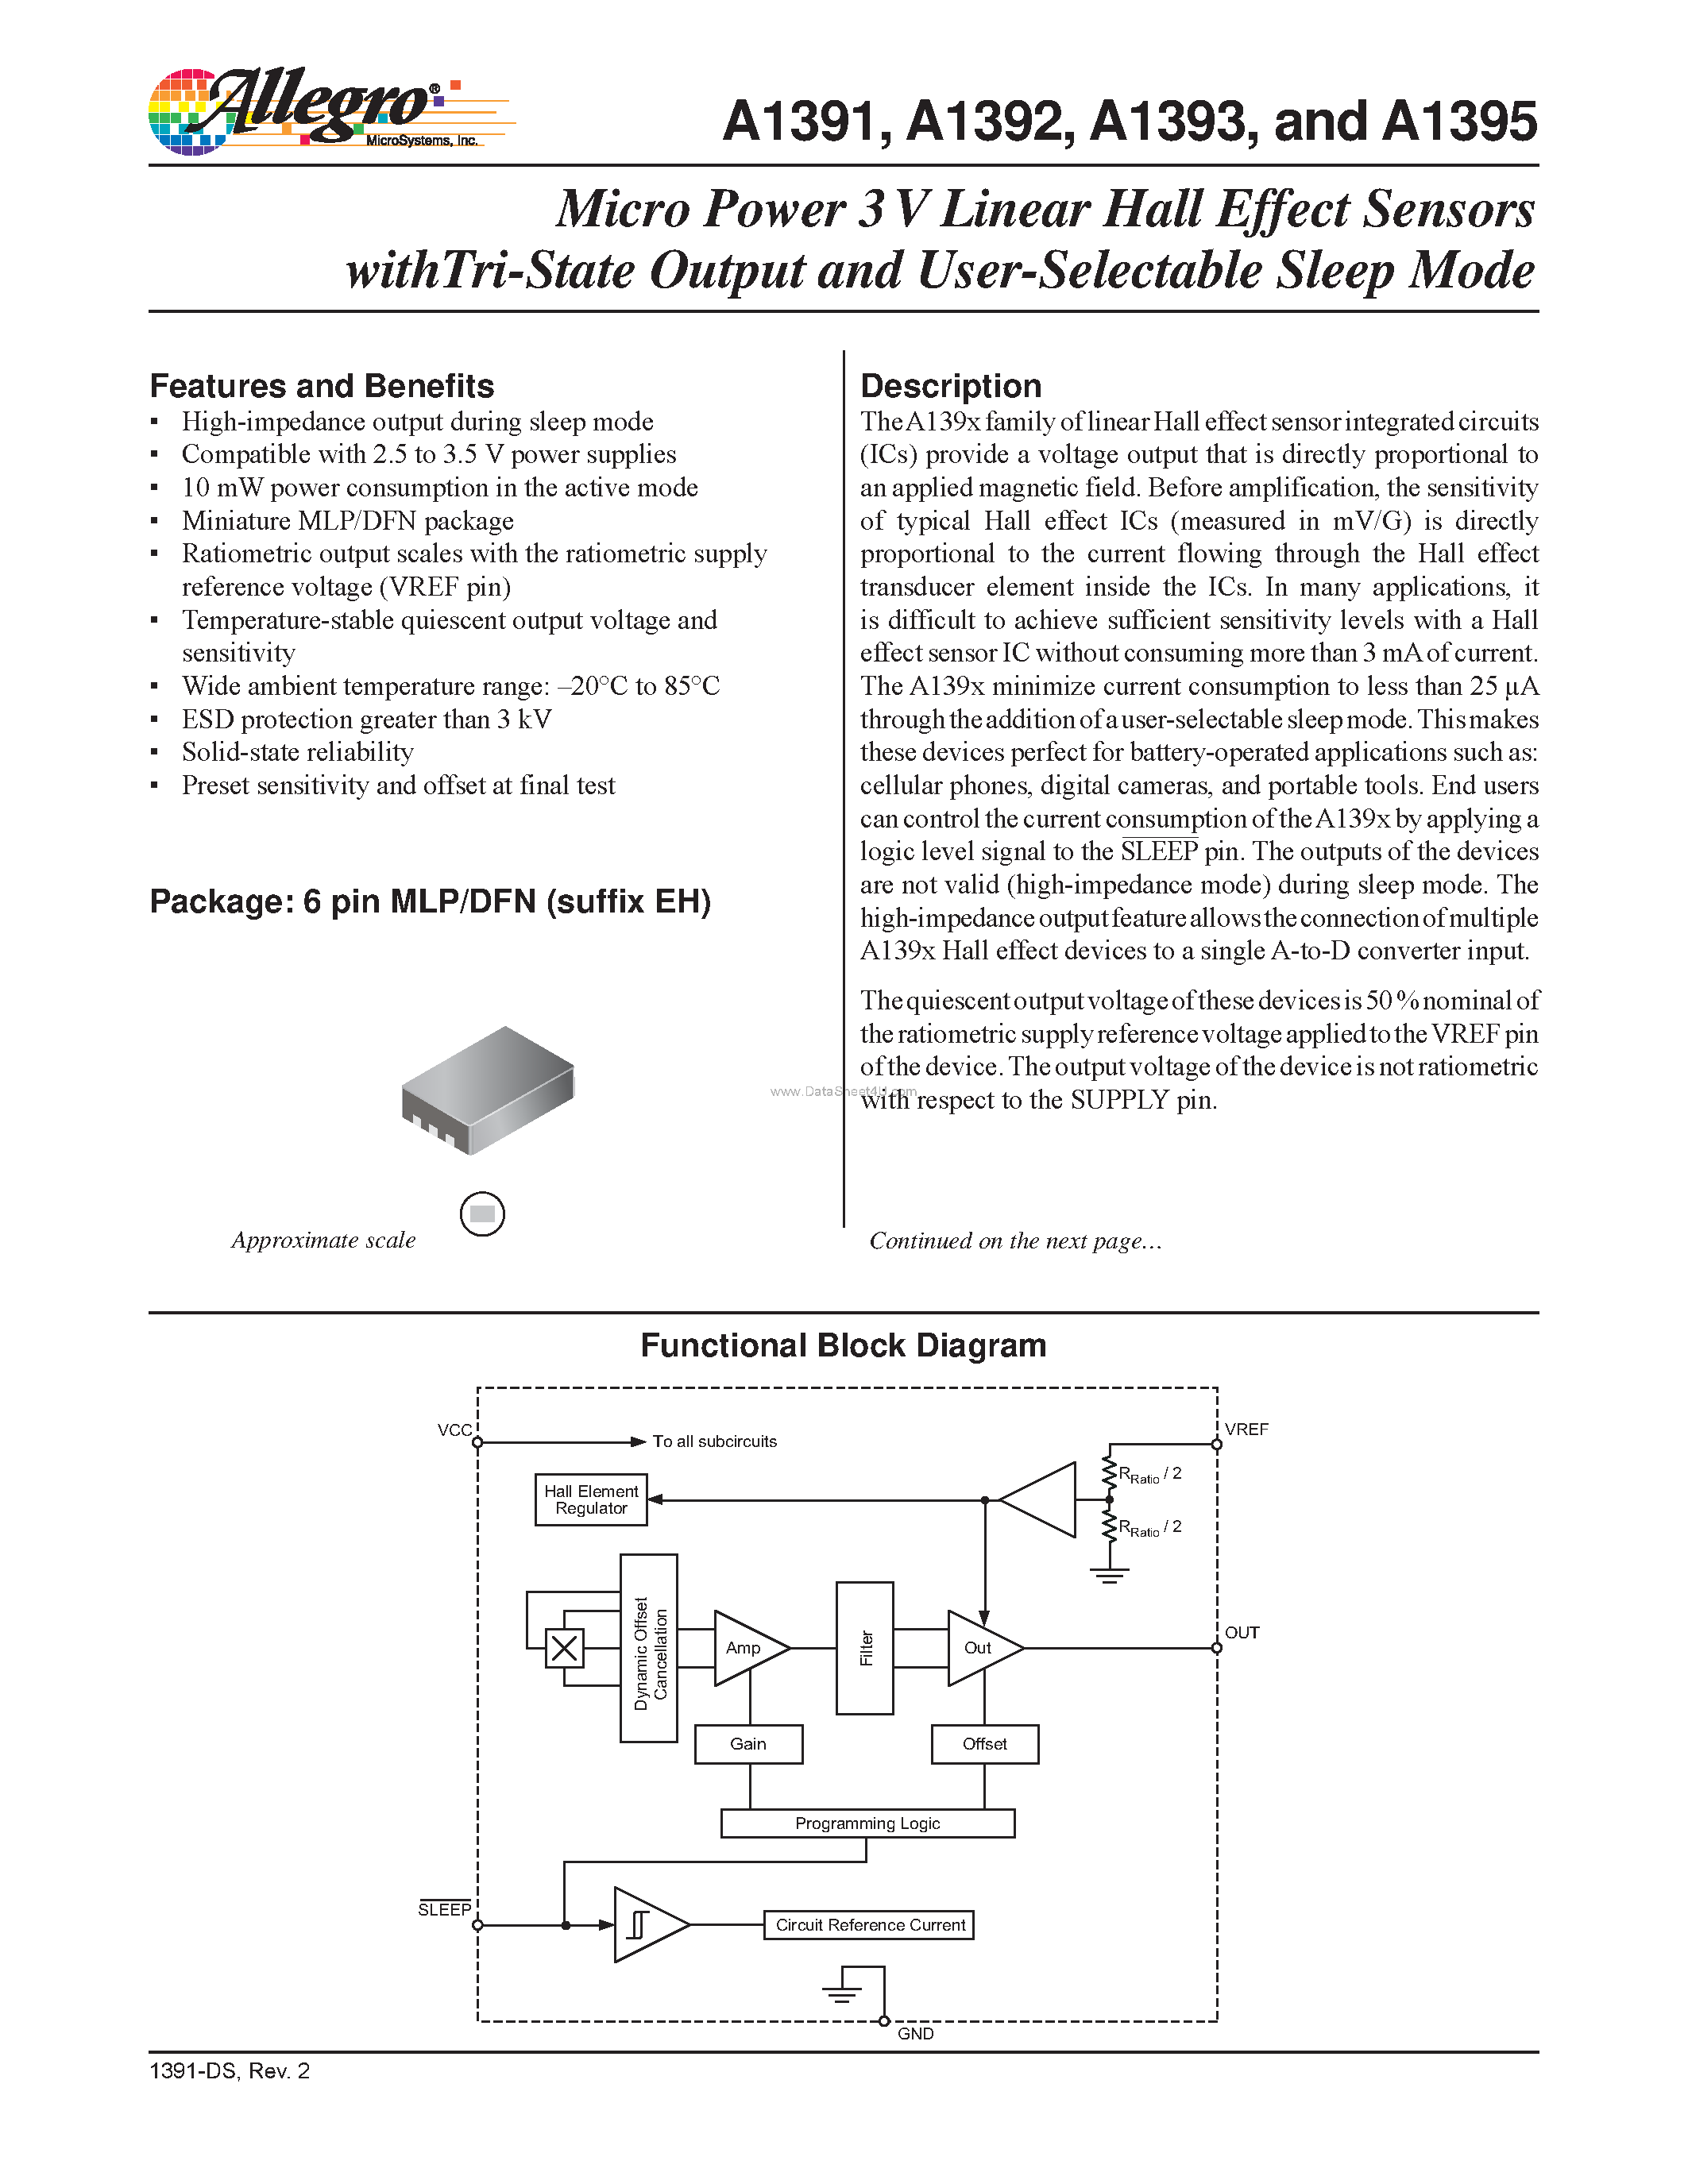 Datasheet A1391 - (A1391 - A1395) Micro Power 3 V Linear Hall Effect Sensors page 1